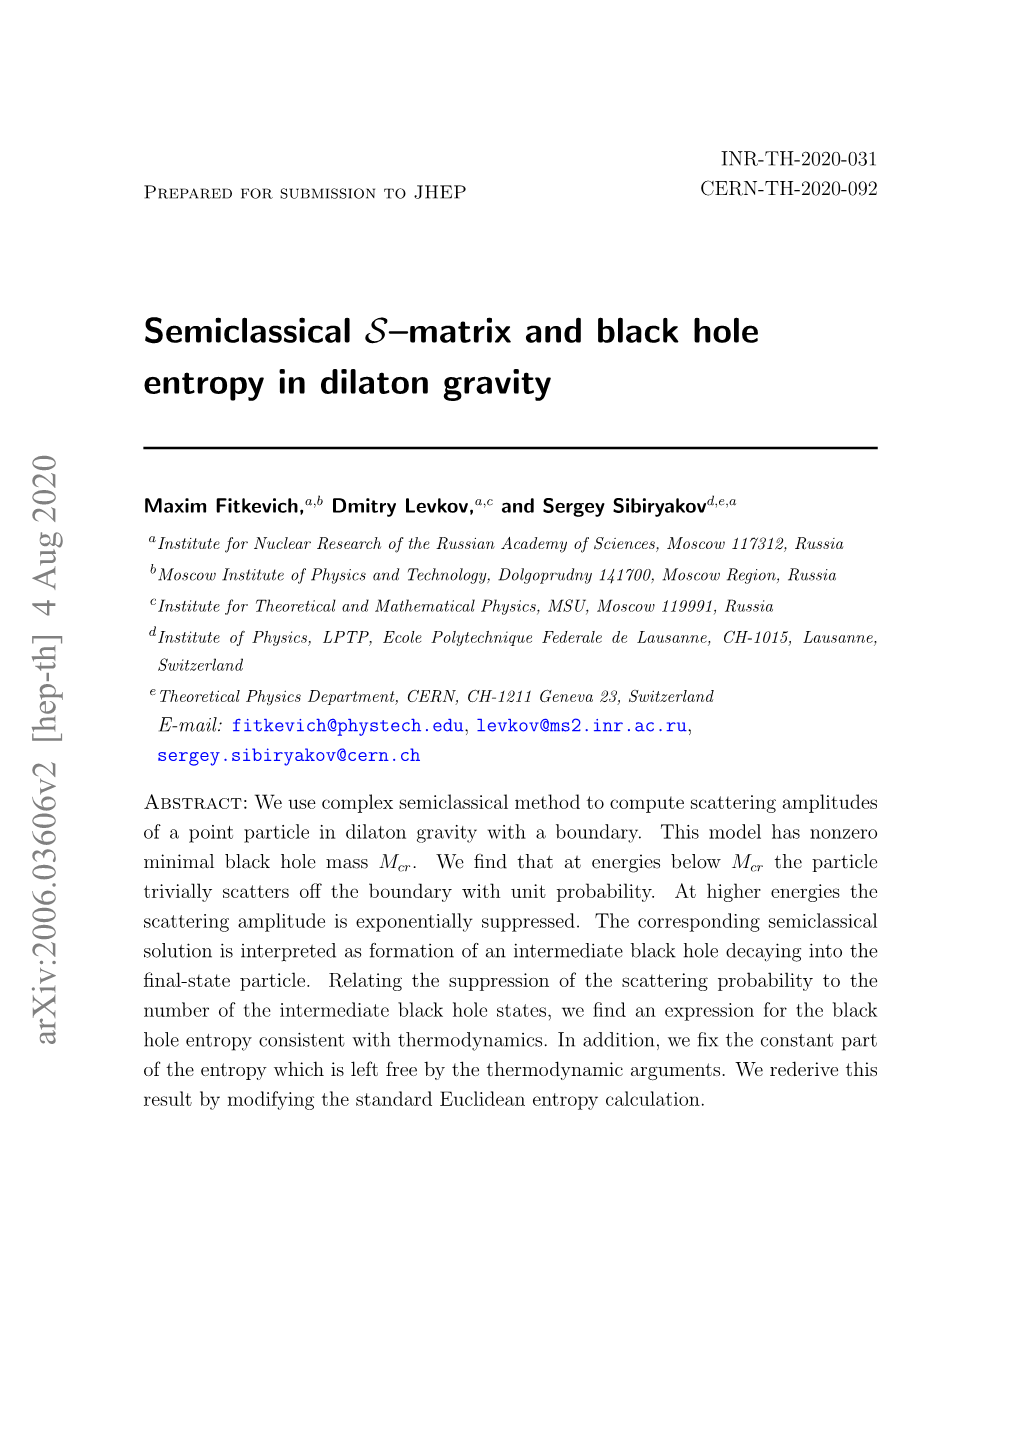 Semiclassical S–Matrix and Black Hole Entropy in Dilaton Gravity Arxiv